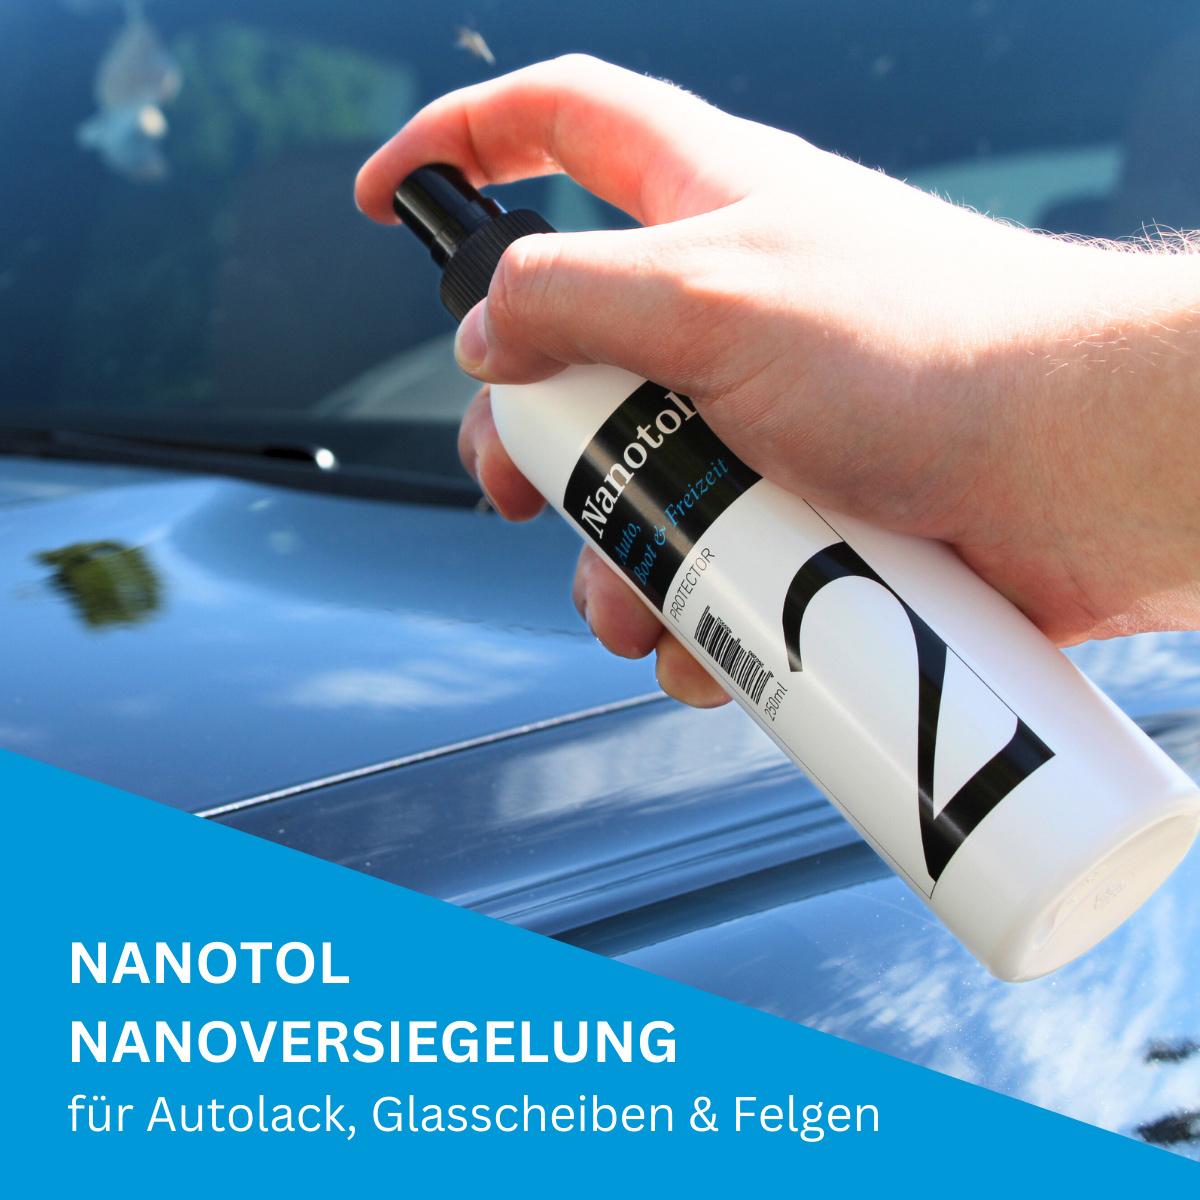 nanotol auto boot freizeit gallery nanotol auto boot freizeit nanoversiegelung versiegelung protector autolack glasscheiben